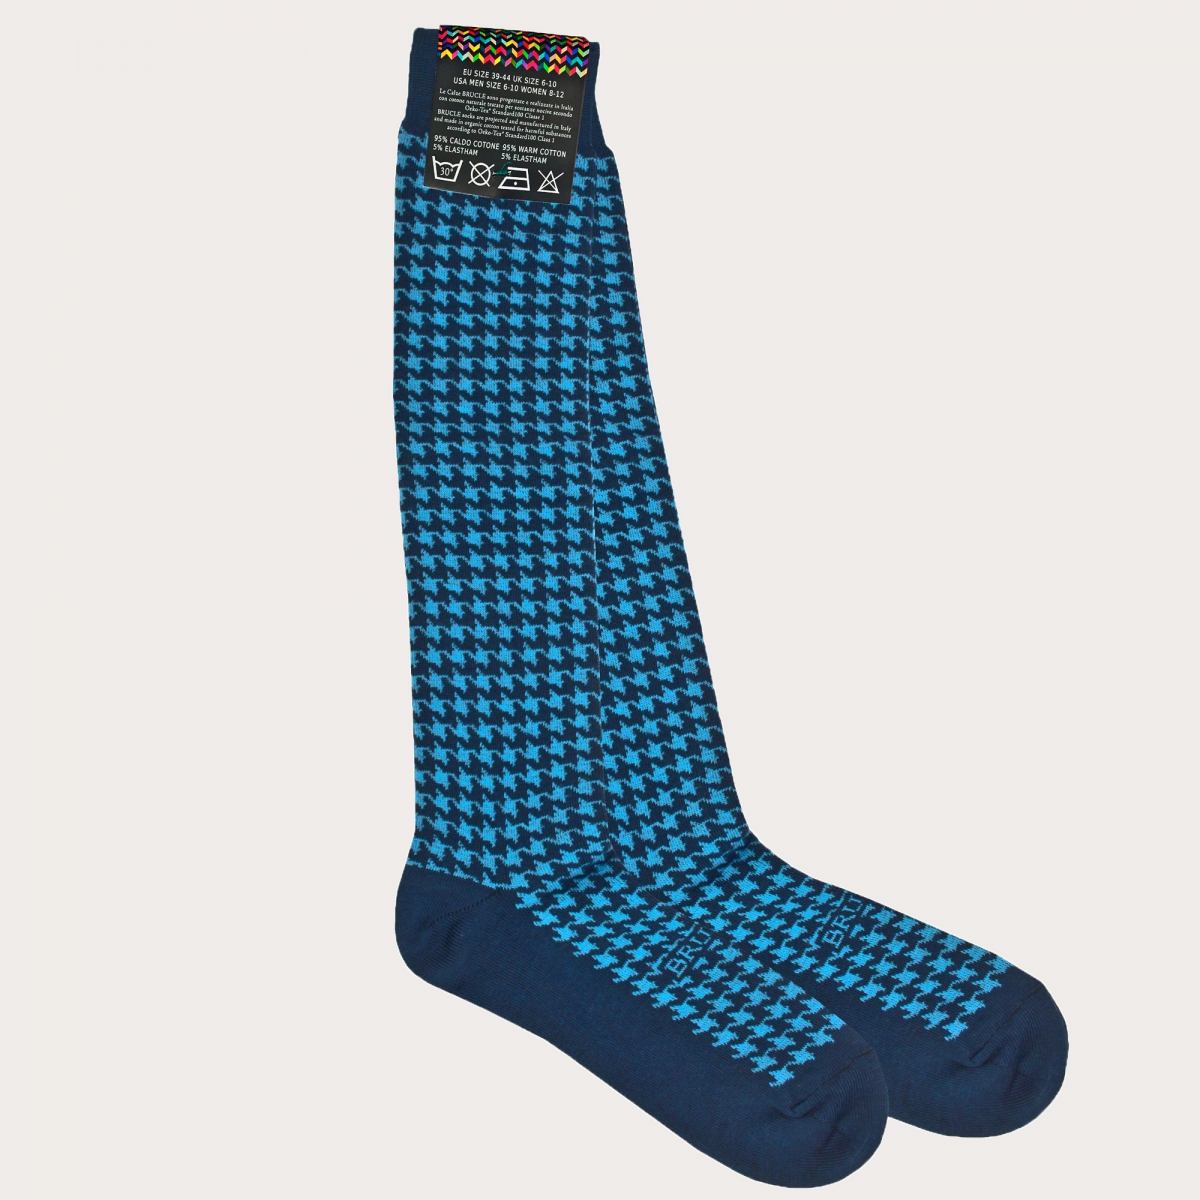 BRUCLE Socken herren blau von Pied de poule